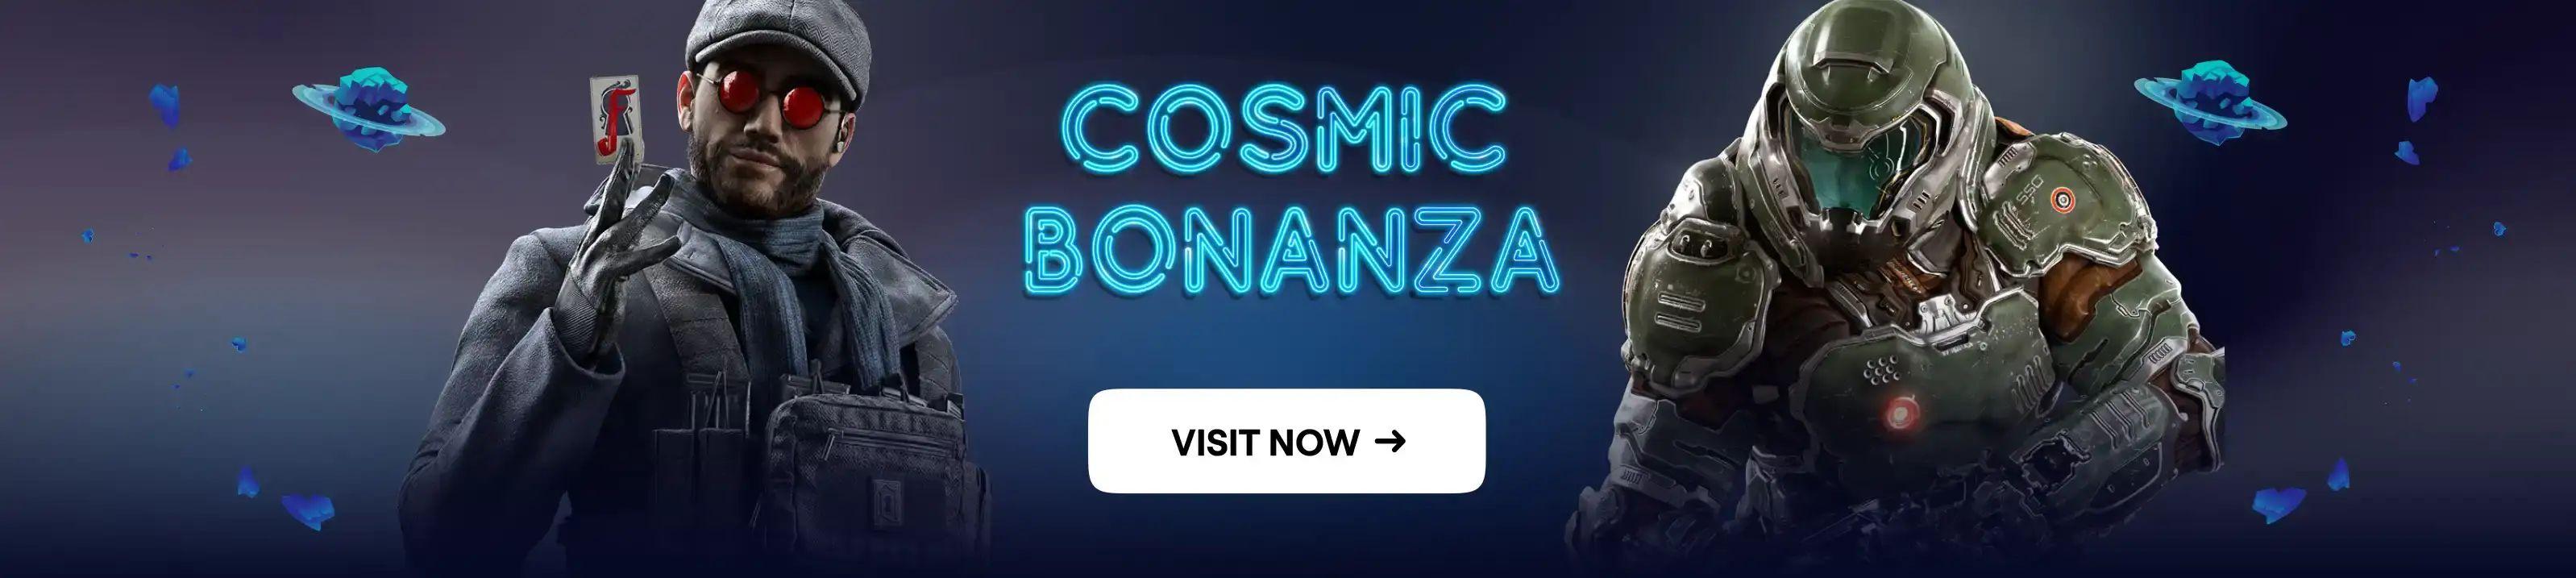 Cosmic Bonanza mobile